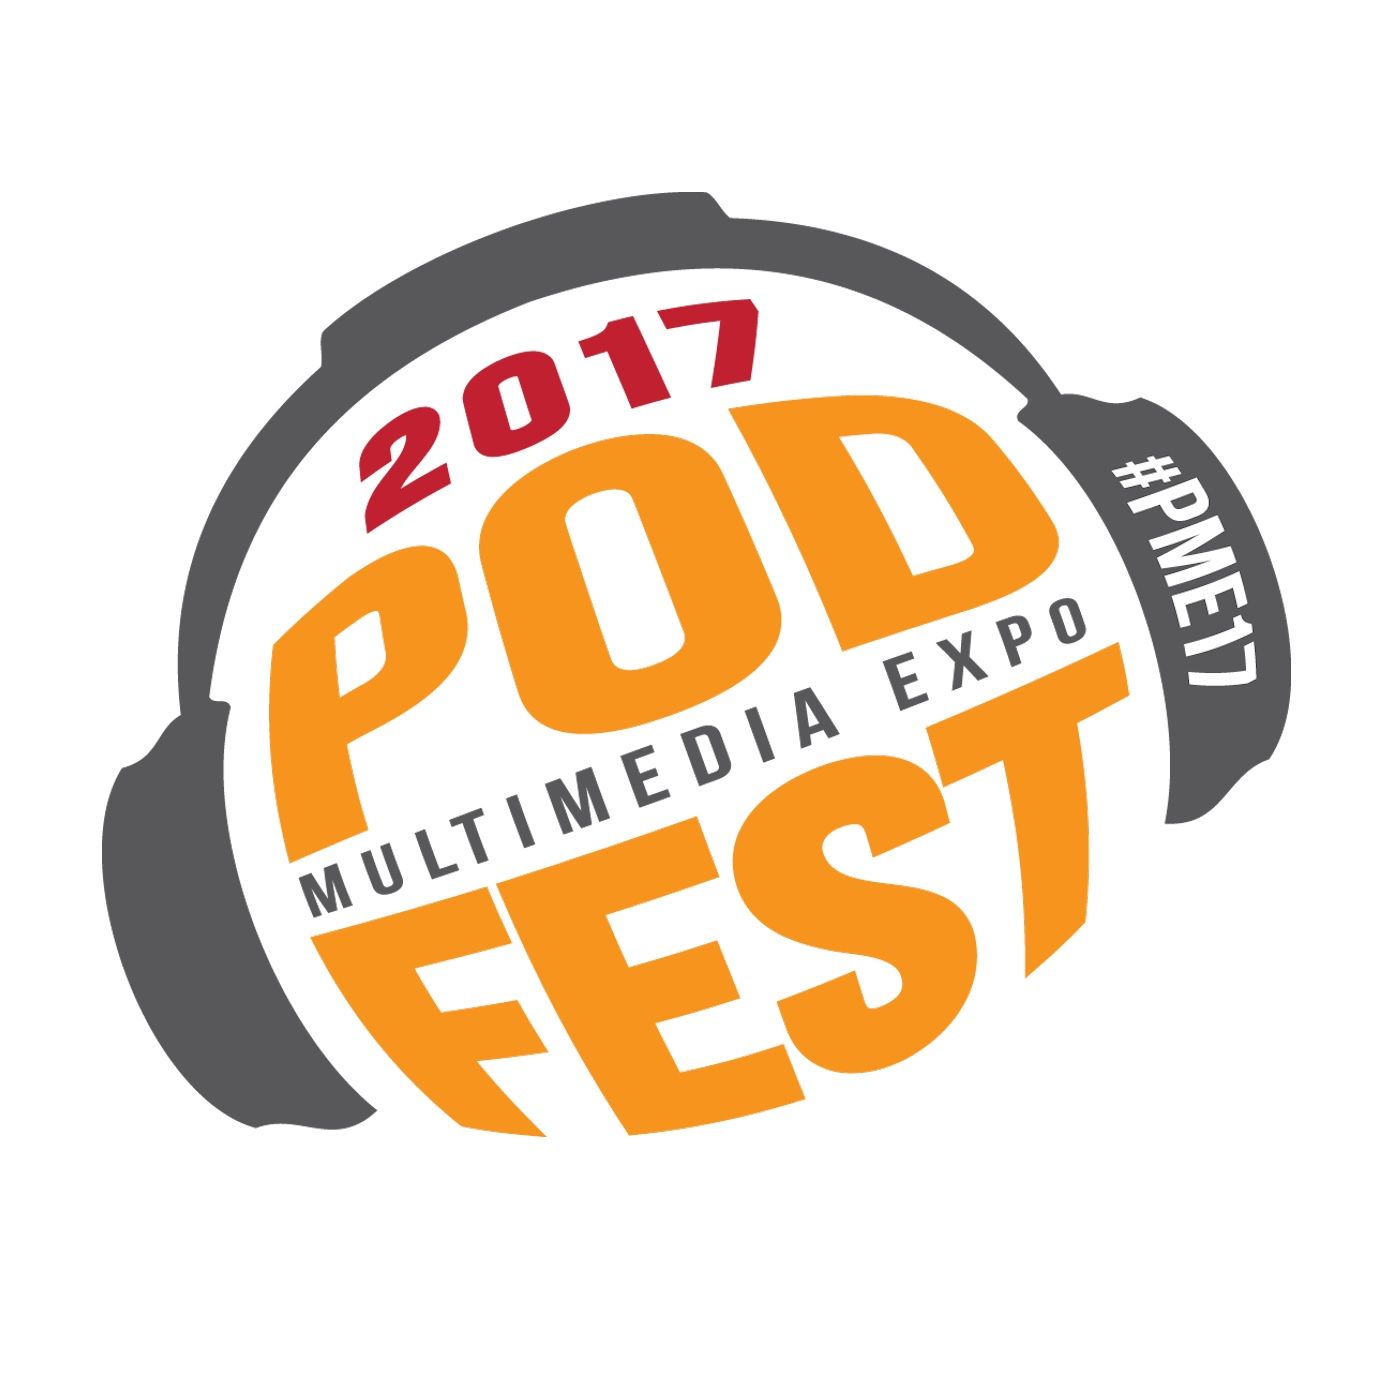 Live from Podfest Multimedia Expo - Podcast Advertising